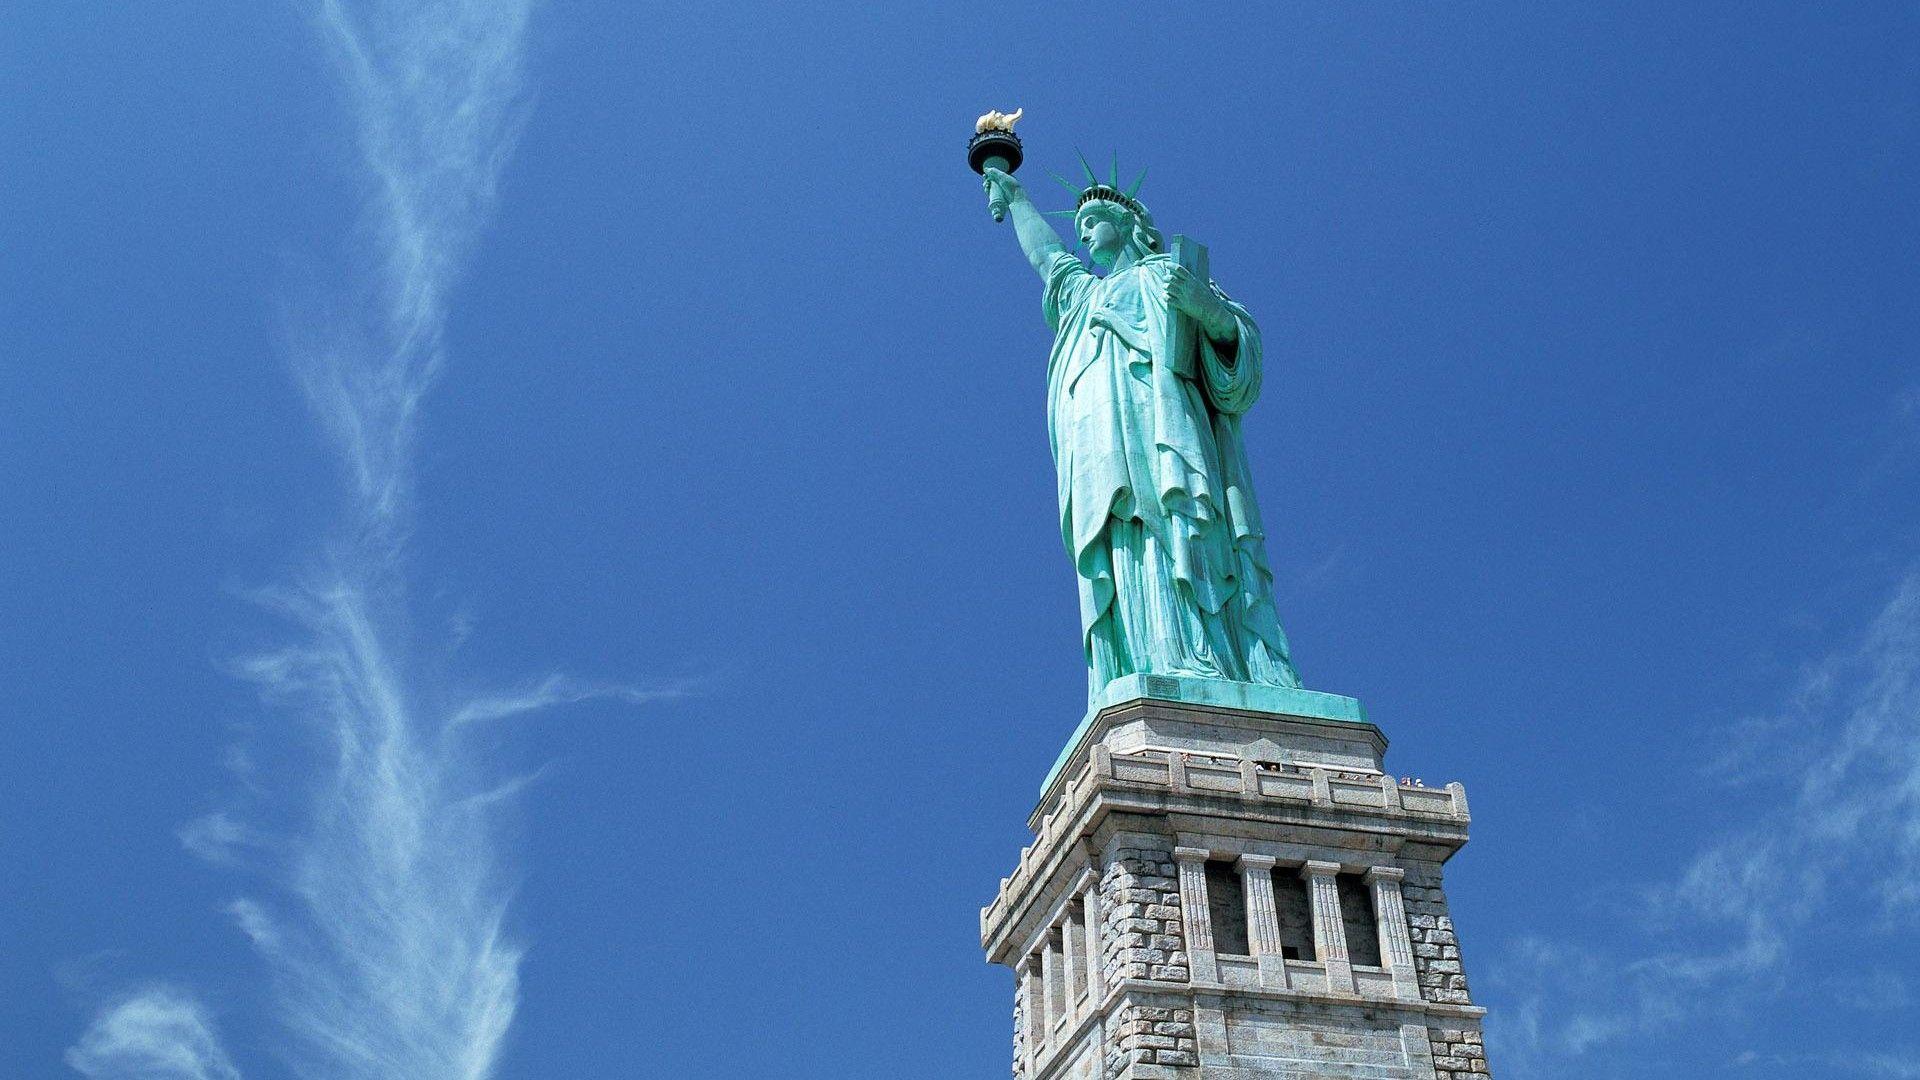 Statue Of Liberty In New York, USA Computer Wallpaper, Desktop